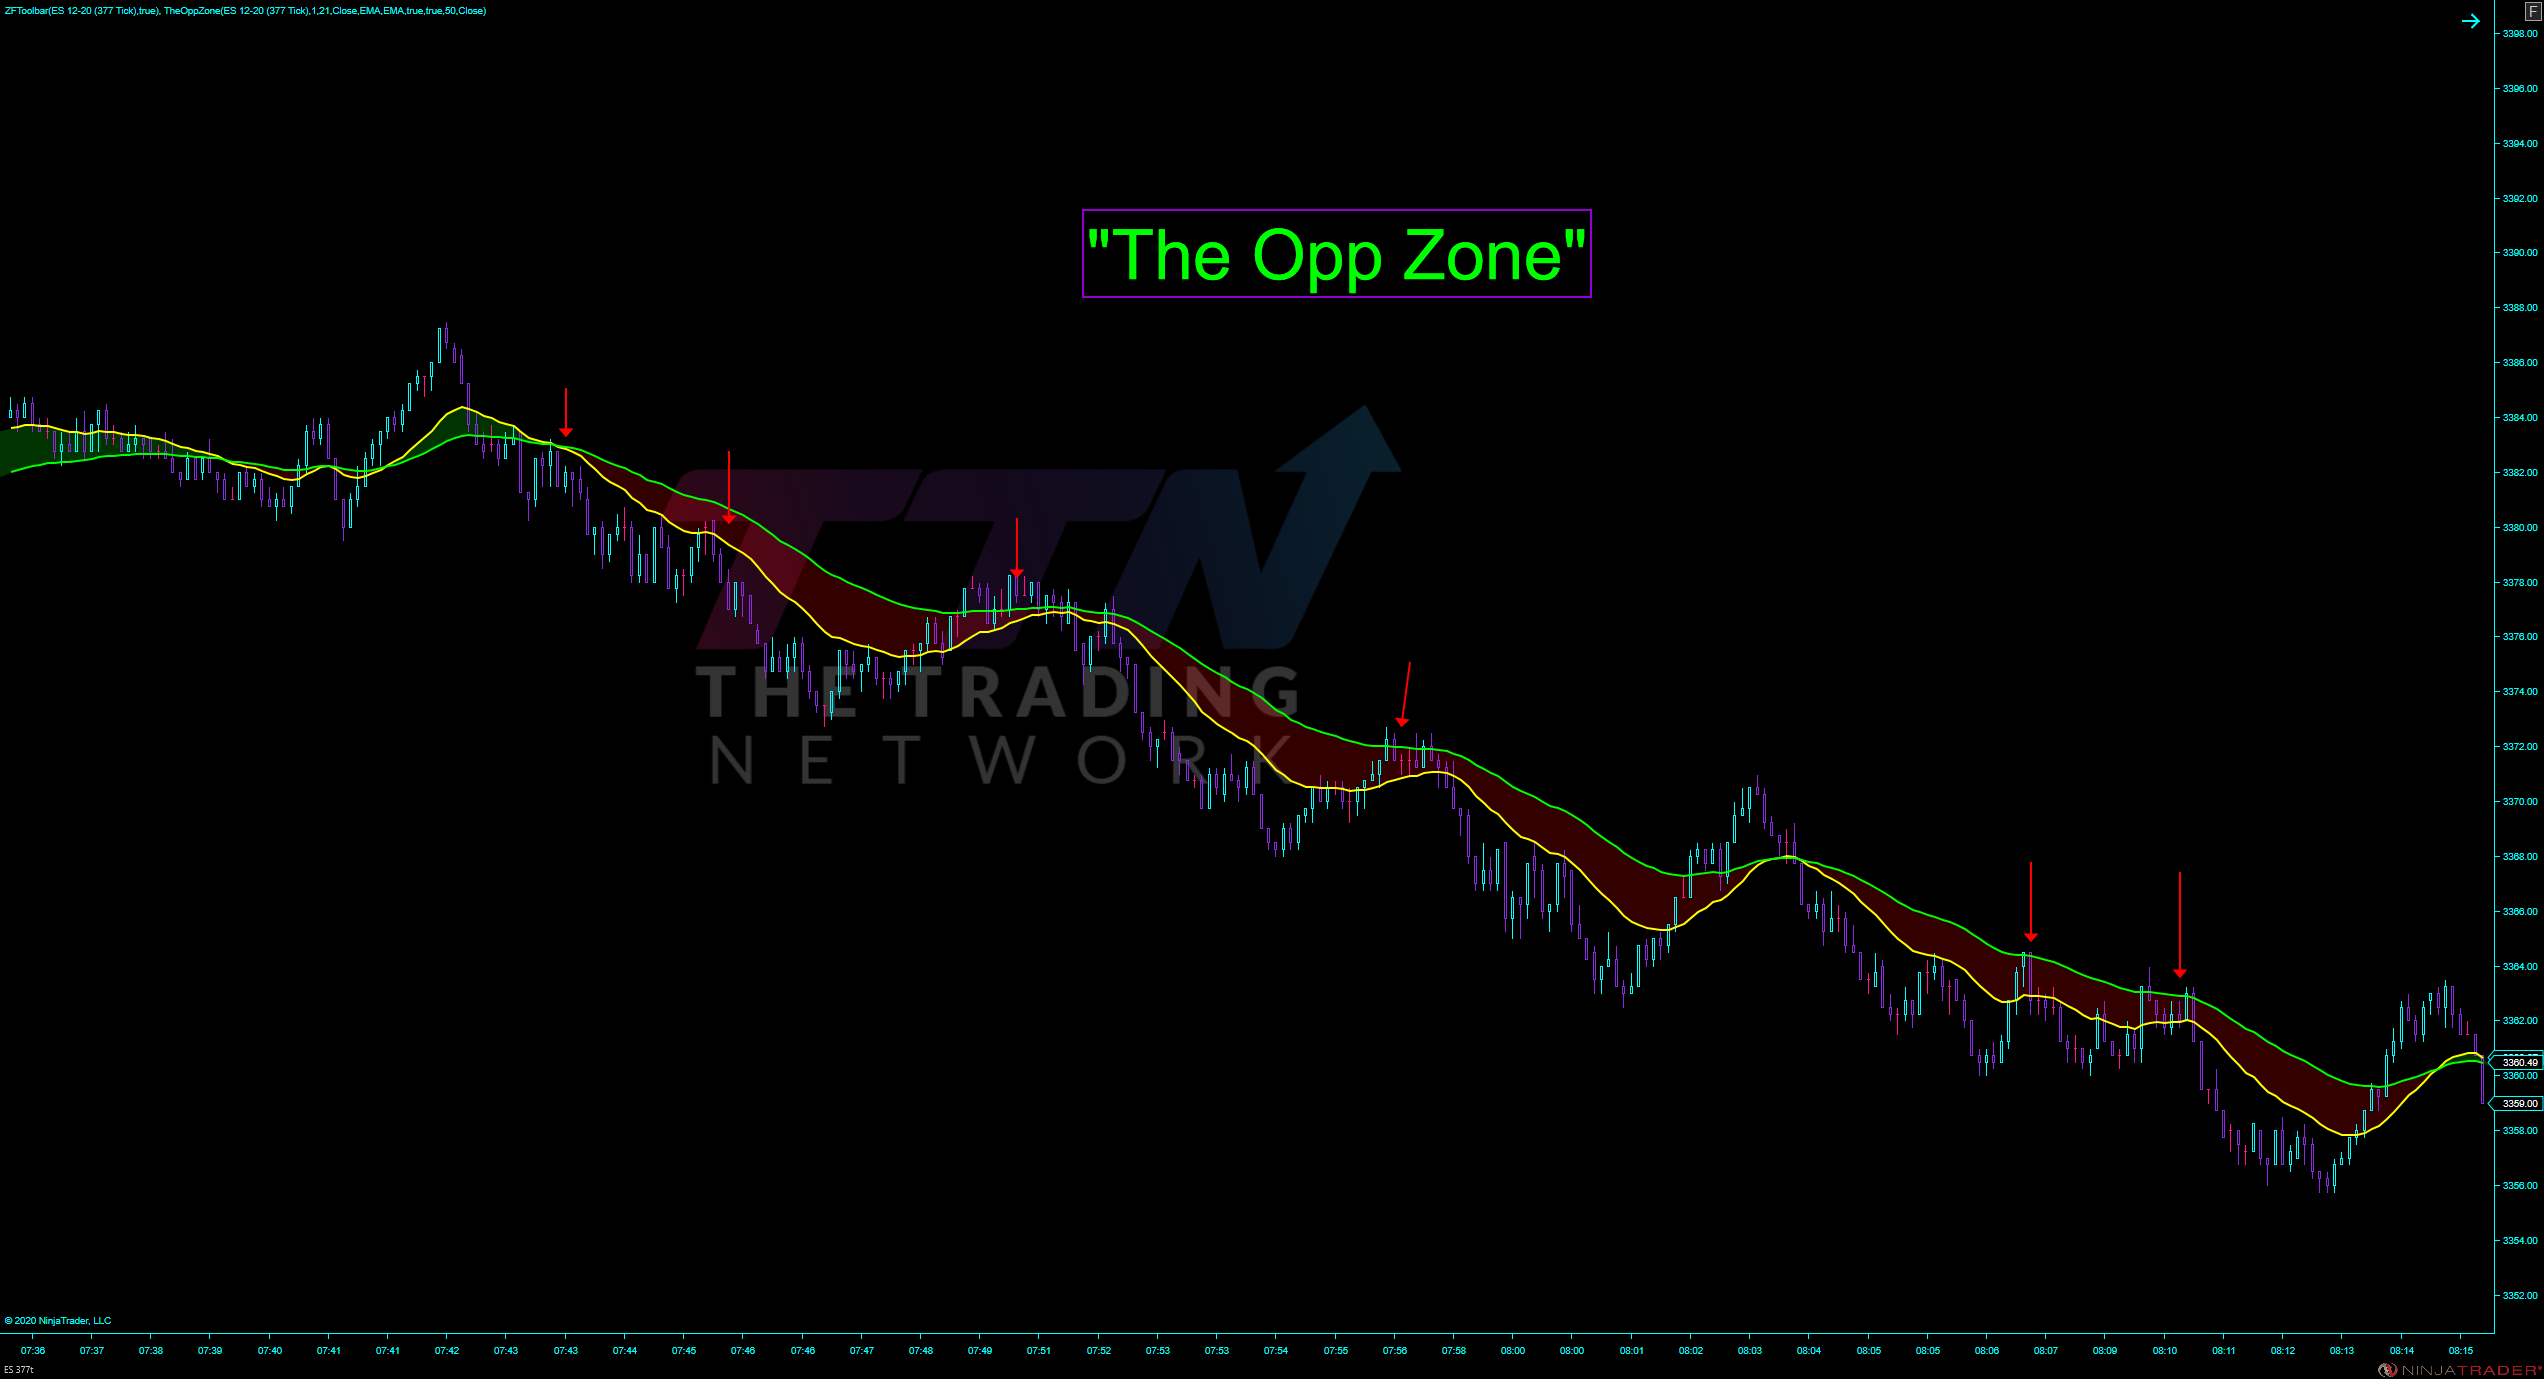 The Opp Zone